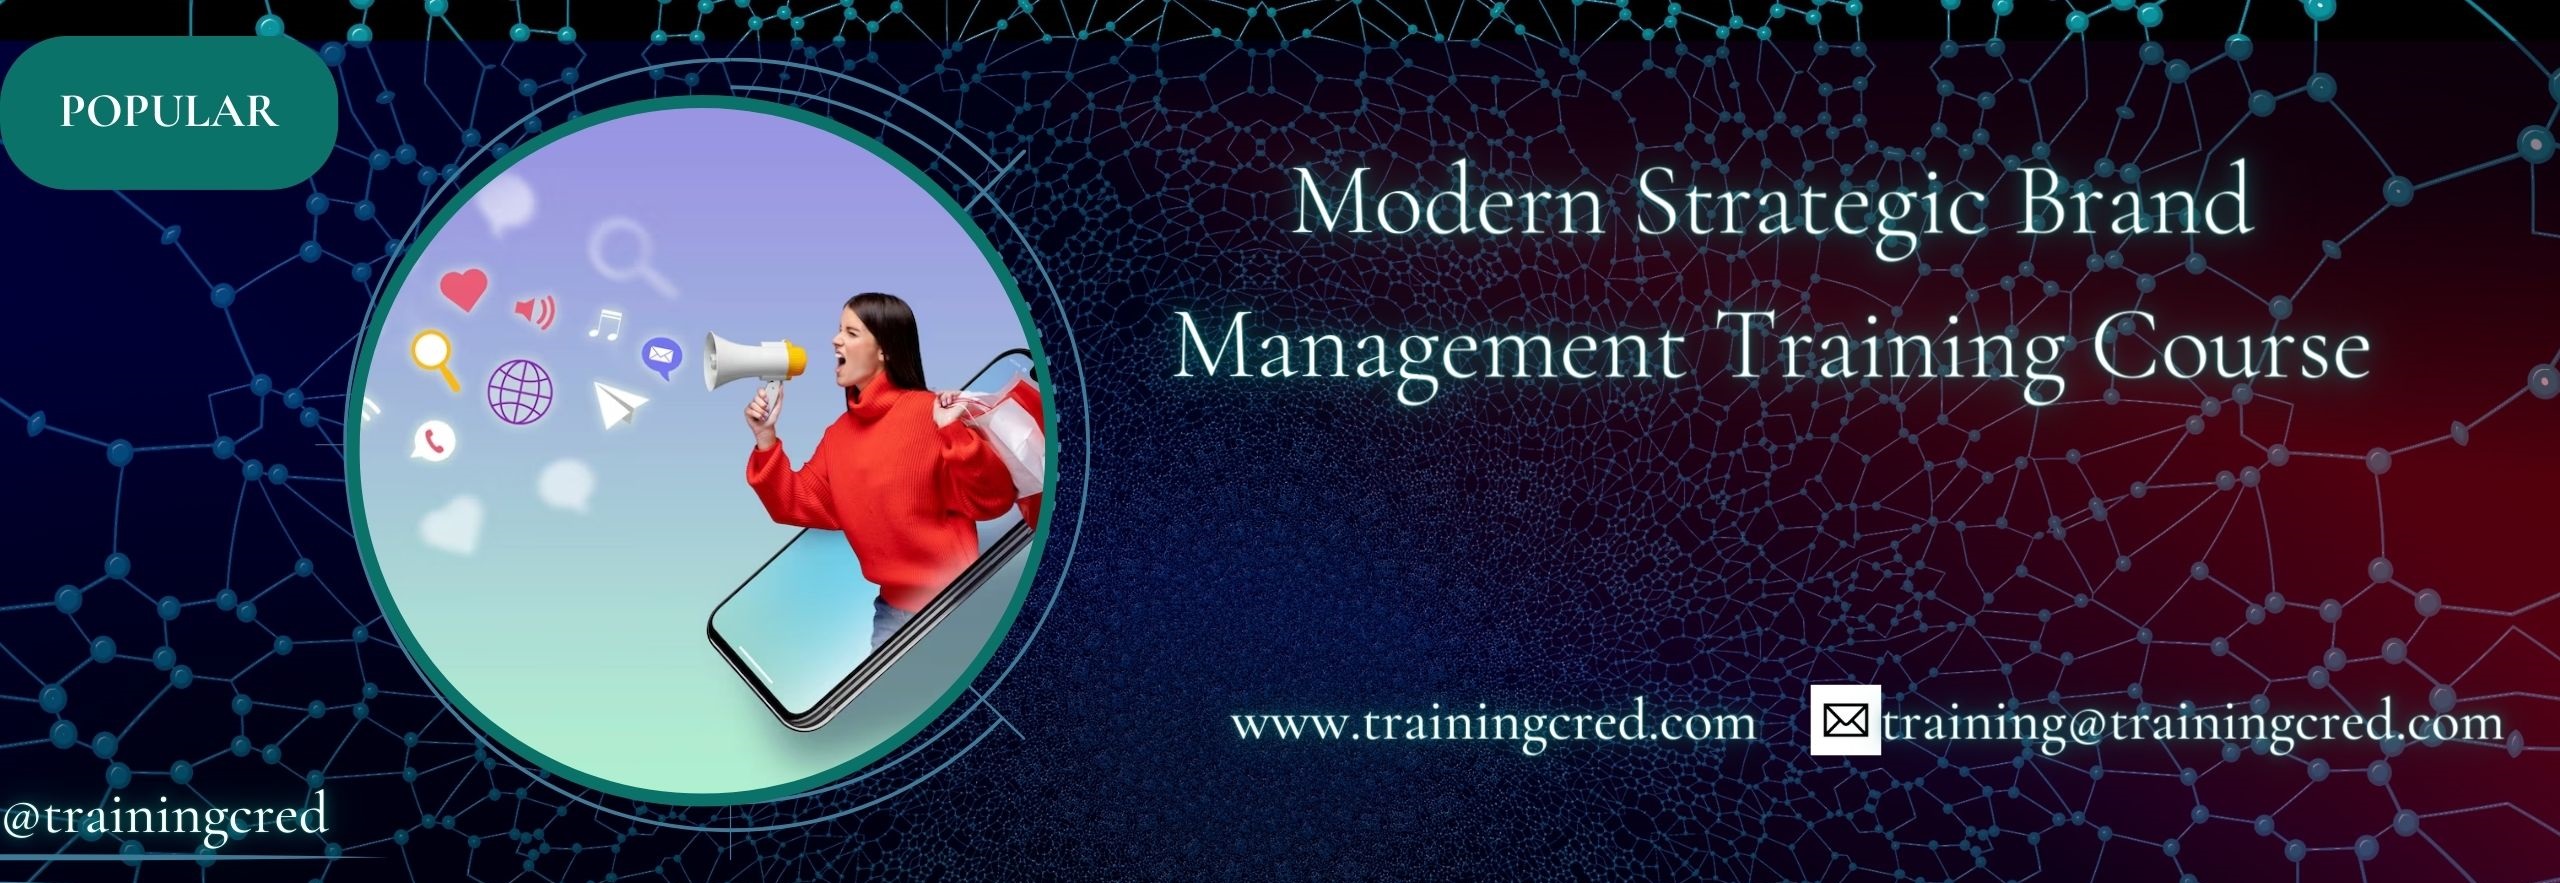 Modern Strategic Brand Management Training